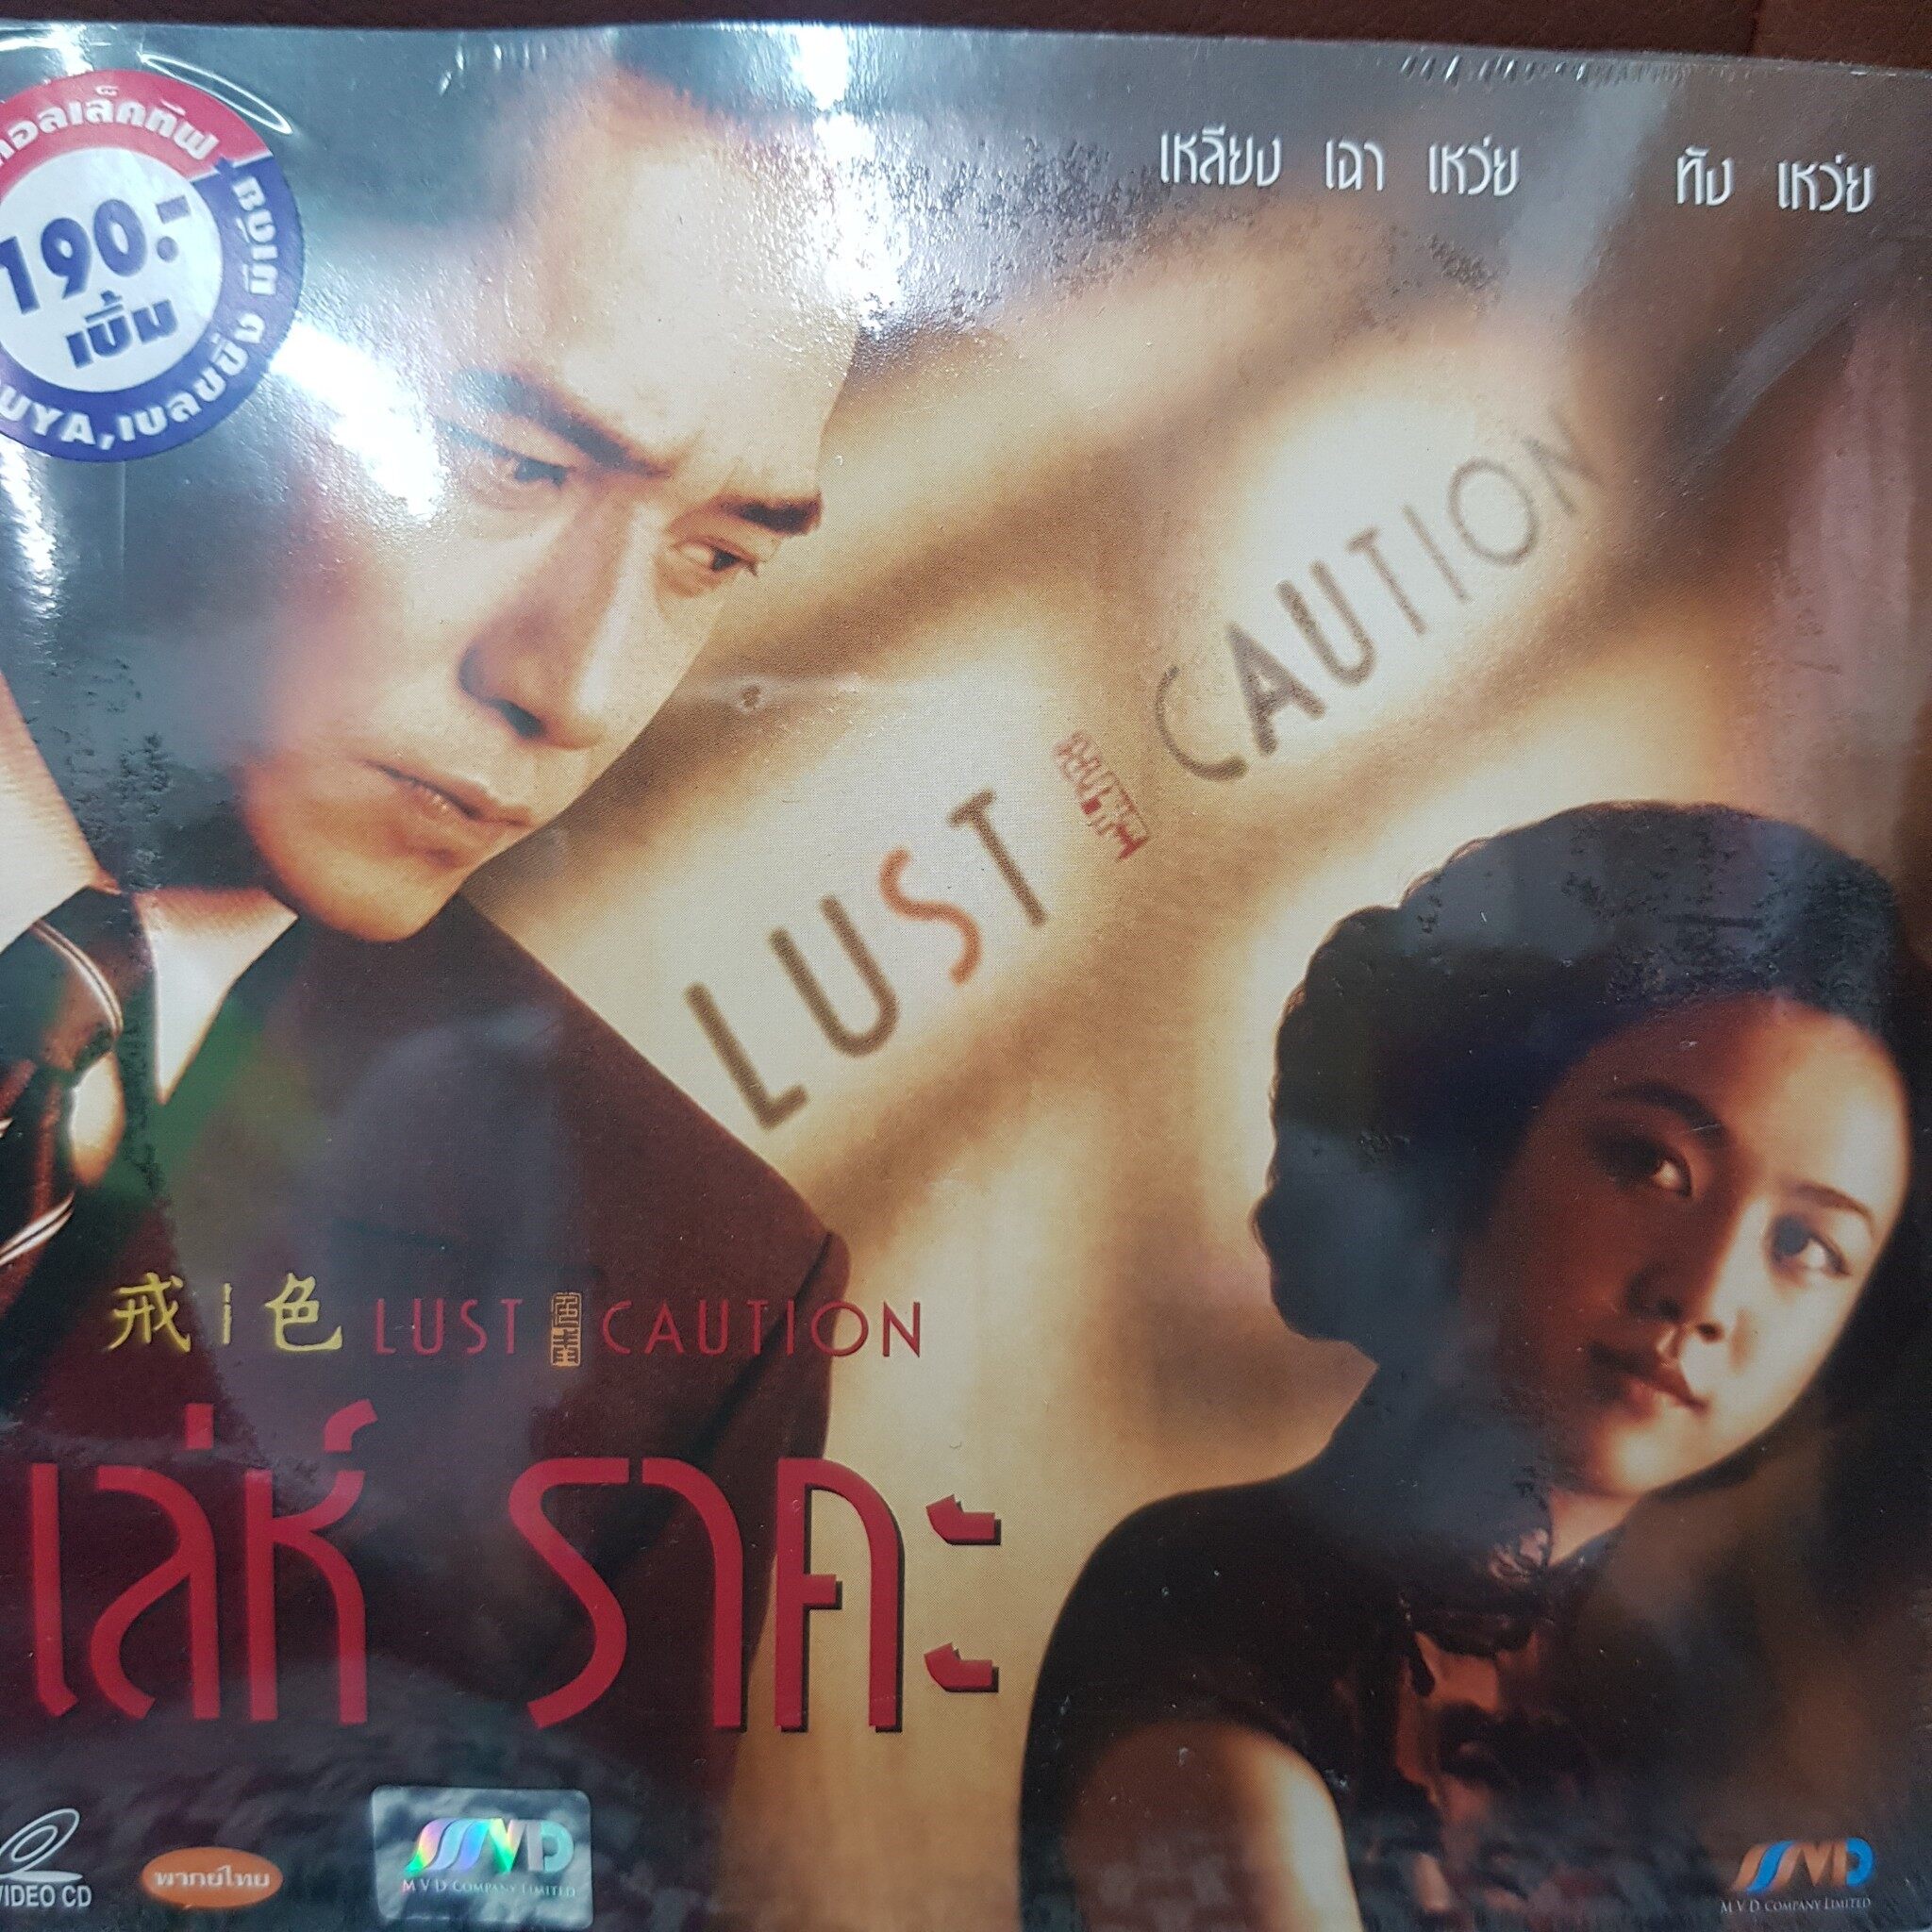 VCDหนัง เล่ห์ ราคะ LUST CAUTION พากย์ไทย (SBYVCD2020-เล่ห์ราคะ) โรแมนติก แผ่นหนัง สะสม หนังโรงภาพยนตร์ ภาพยนตร์ หนังไทยเก่า หนัง งาน2020 cinema vcd วีซีดี STARMART